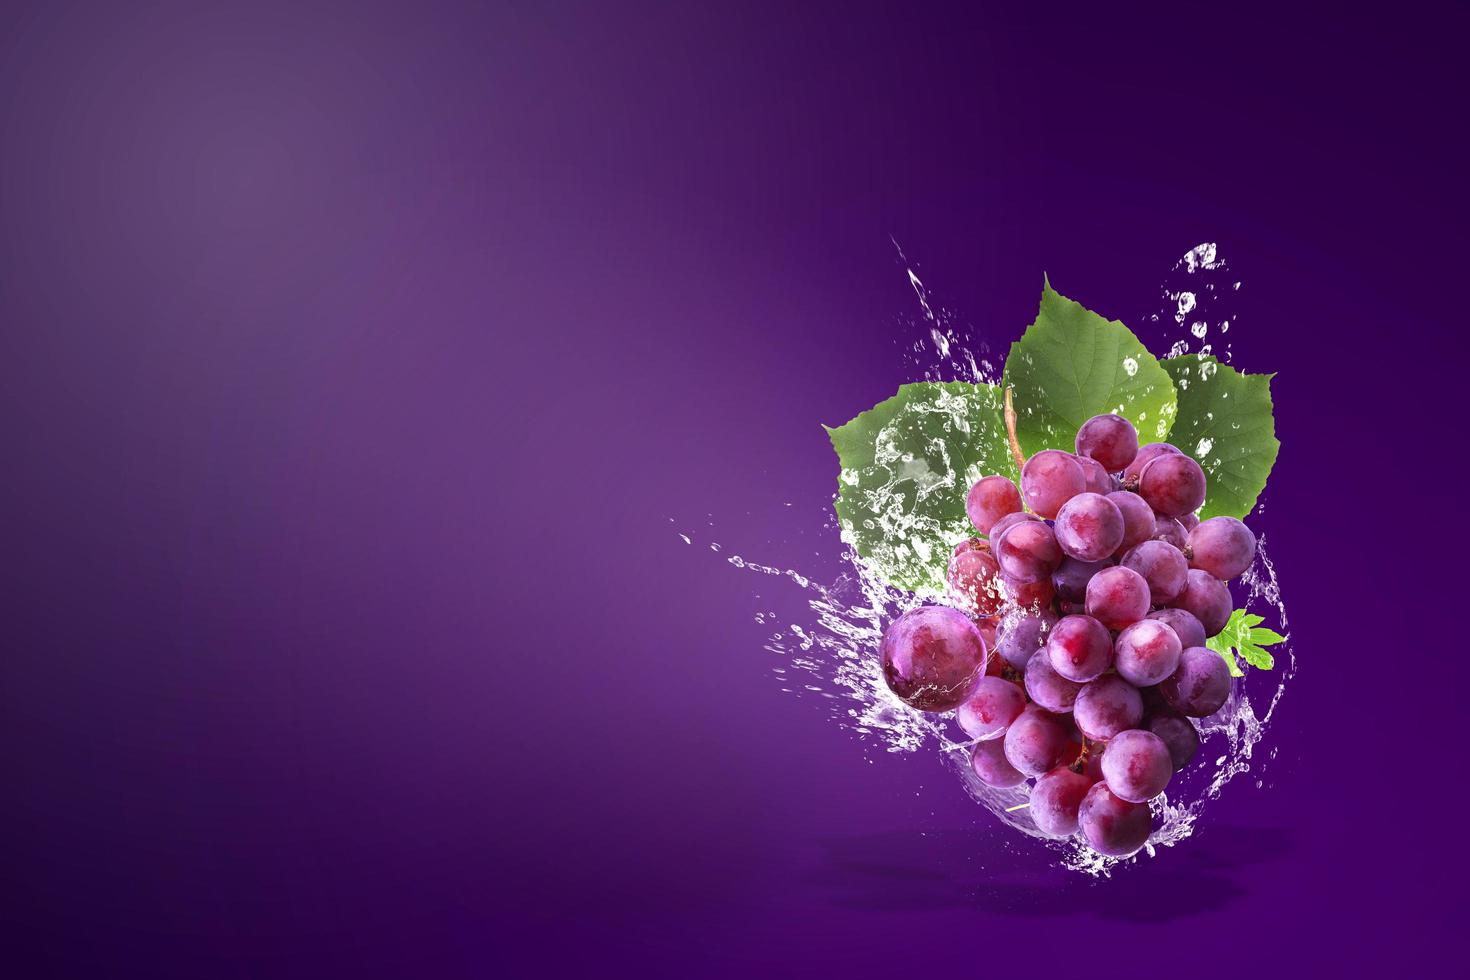 spruzzi d'acqua sulle uve rosse fresche foto